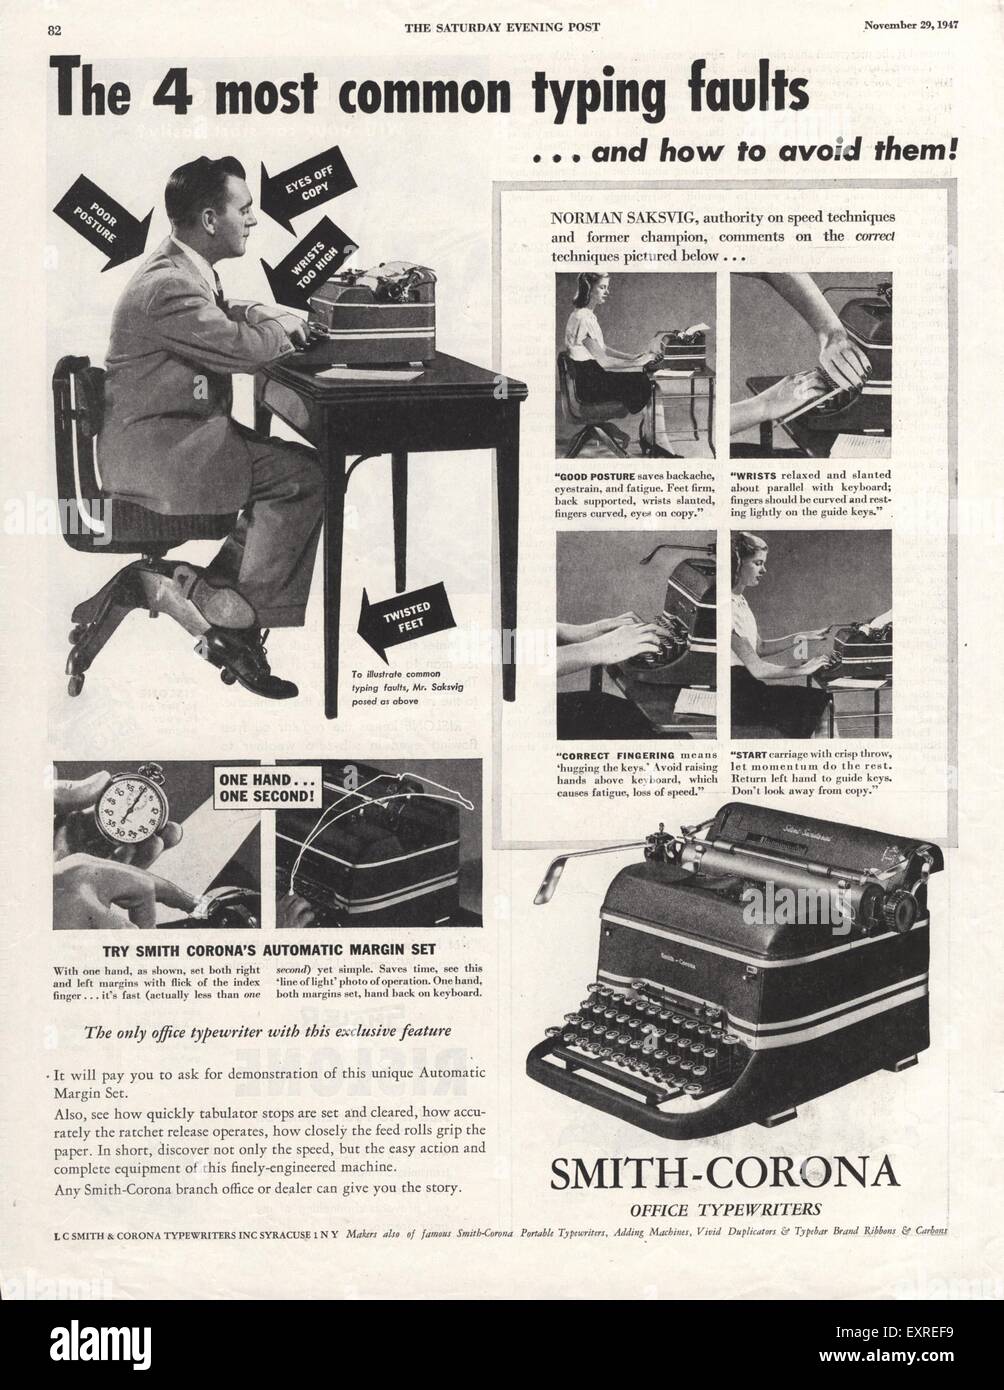 1940s USA Smith-Corona Magazine Advert Stock Photo